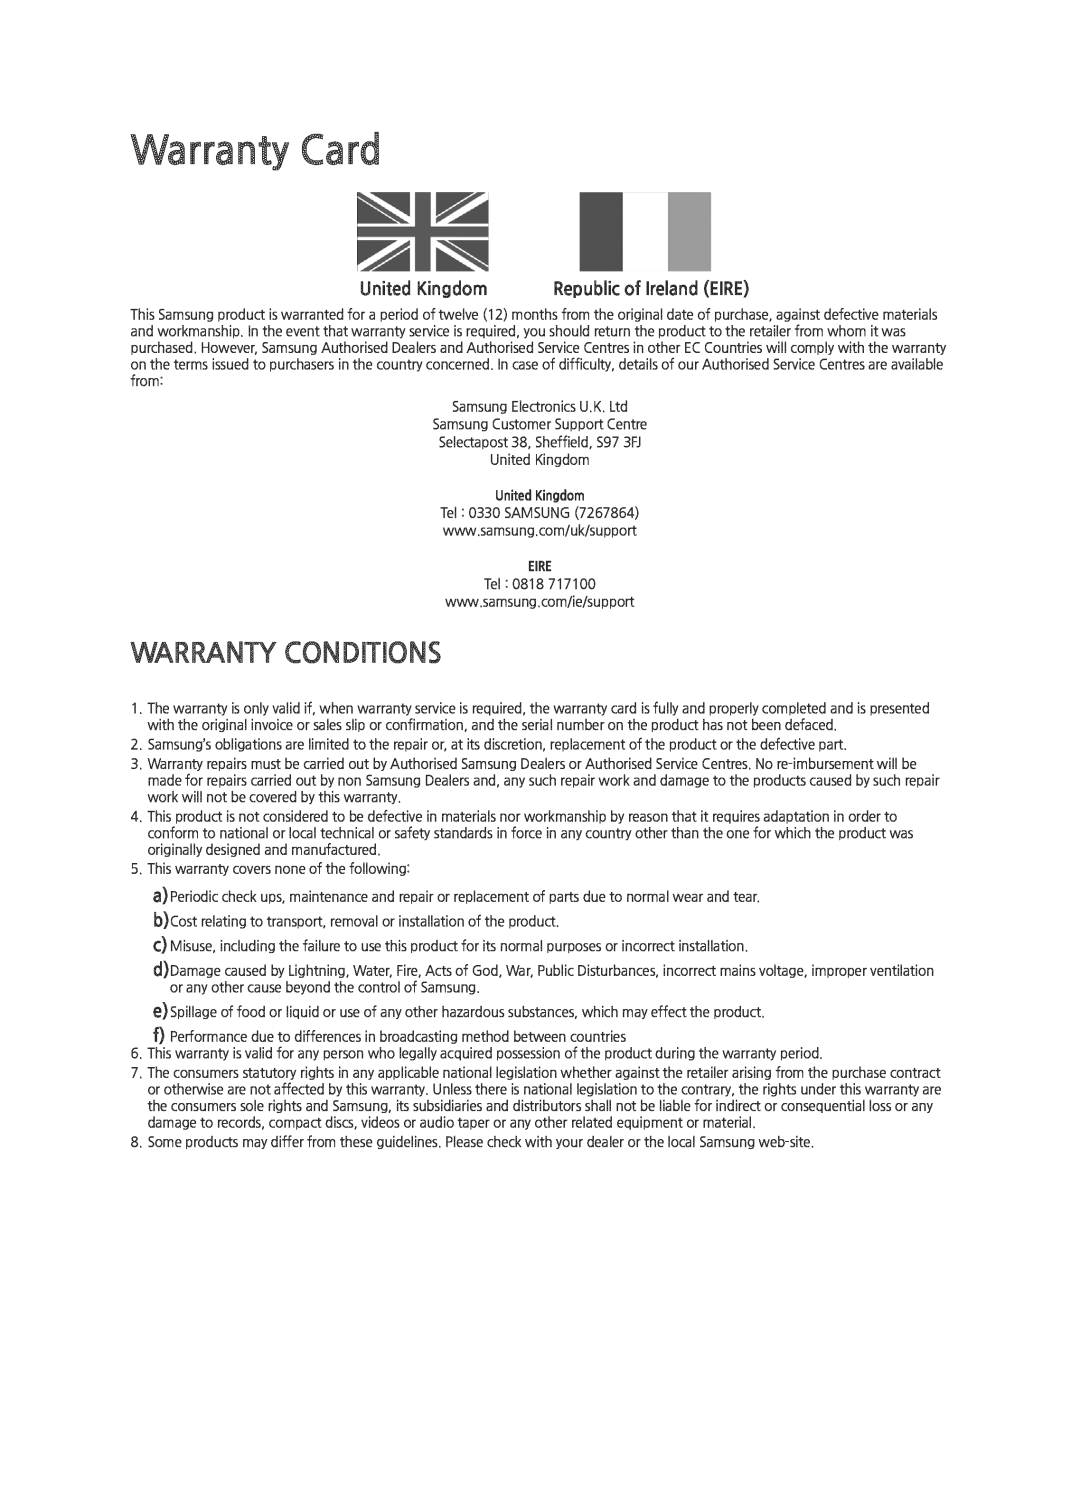 Samsung UE55JS8500TXZF, UE48JS8500TXXC Warranty Card, Warranty Conditions, Republic of Ireland EIRE, United Kingdom, Eire 